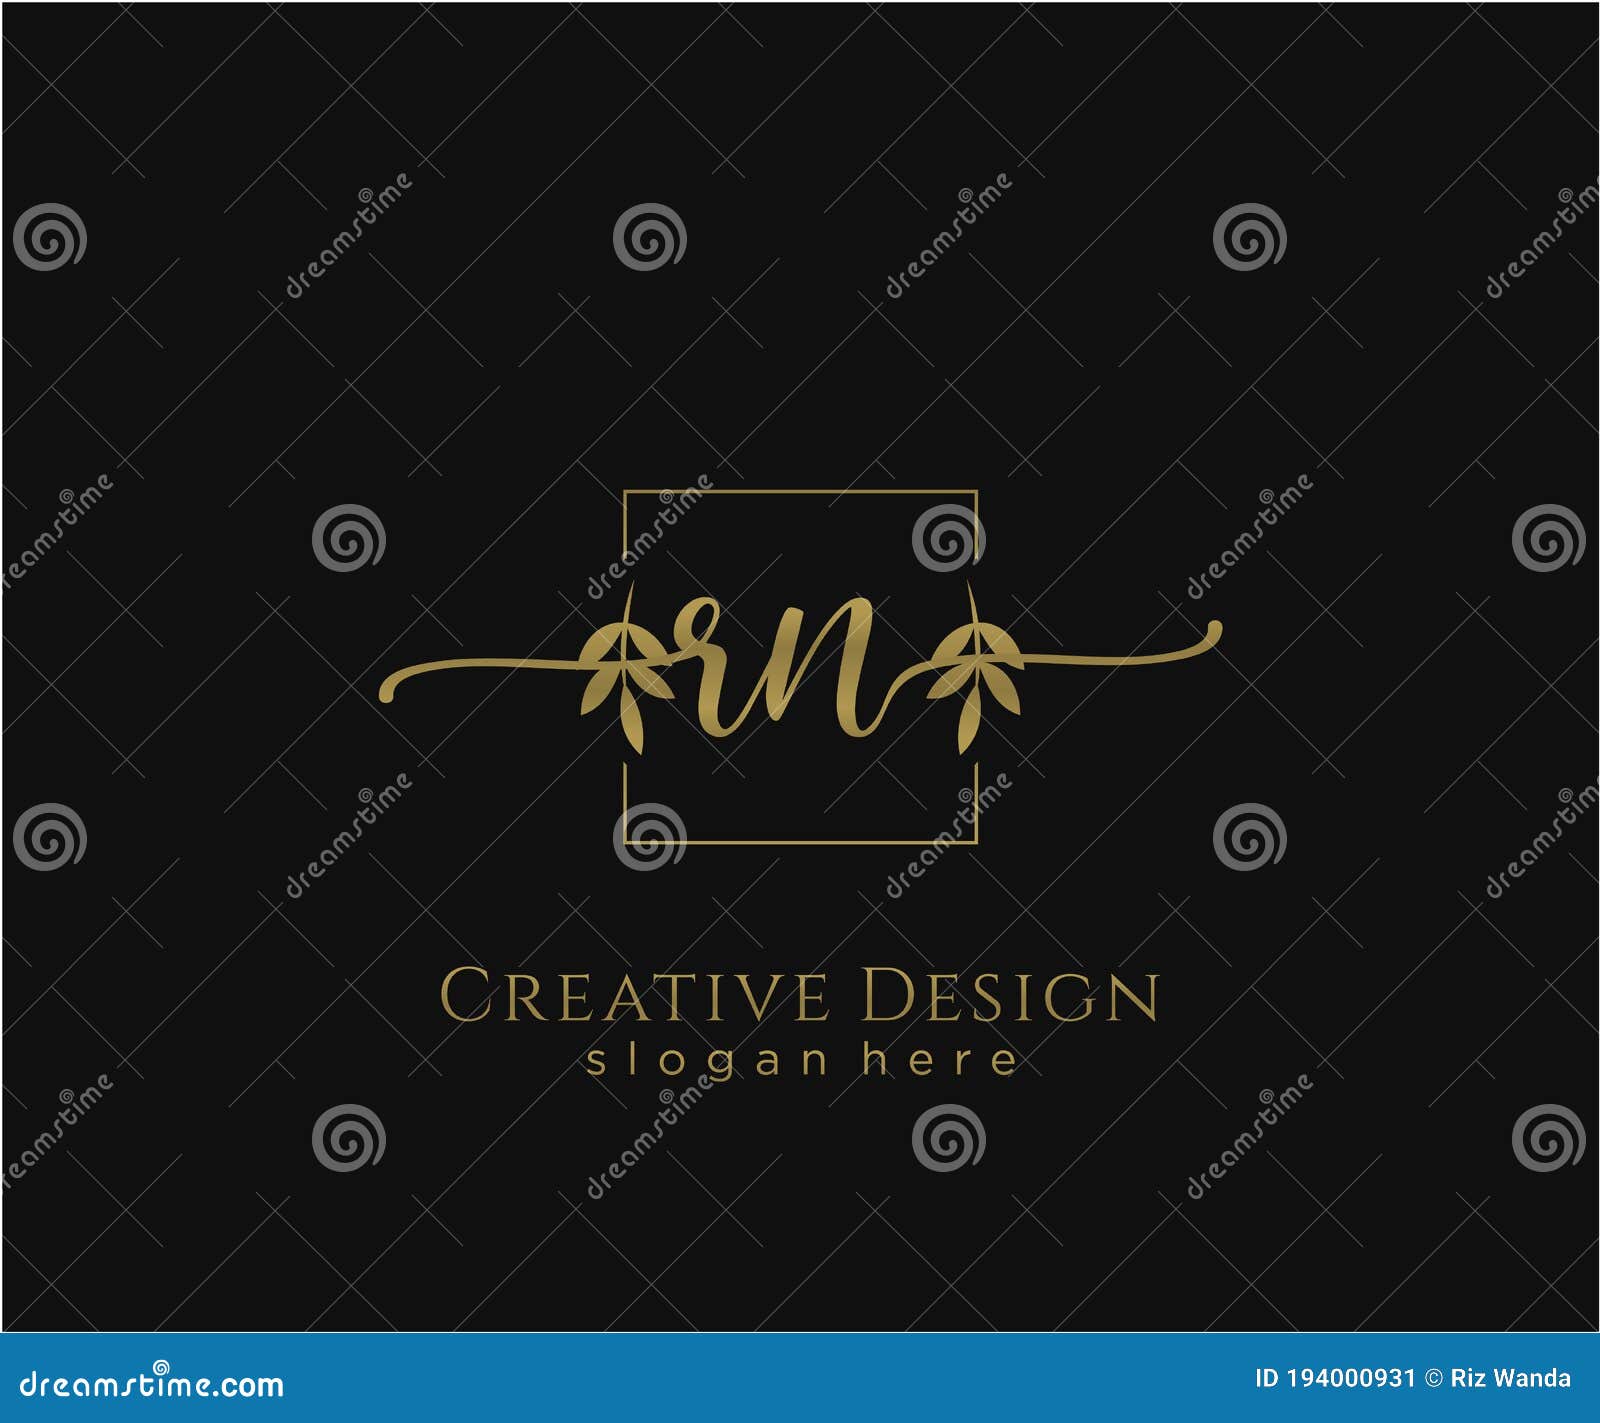 R.N edits | Edit logo, Retail logos, ? logo